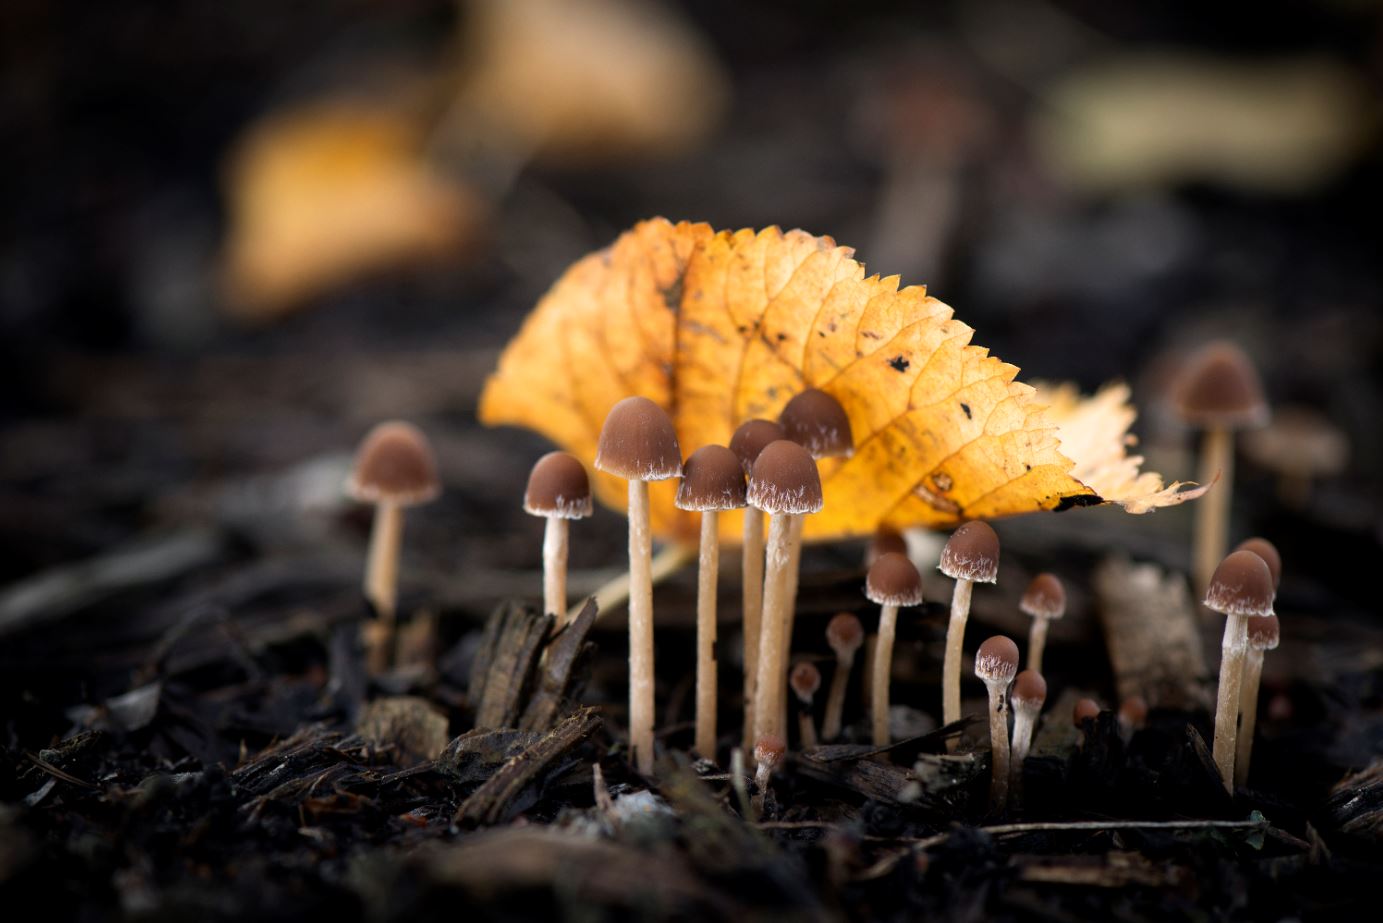 Fungi mushrooming near a leaf